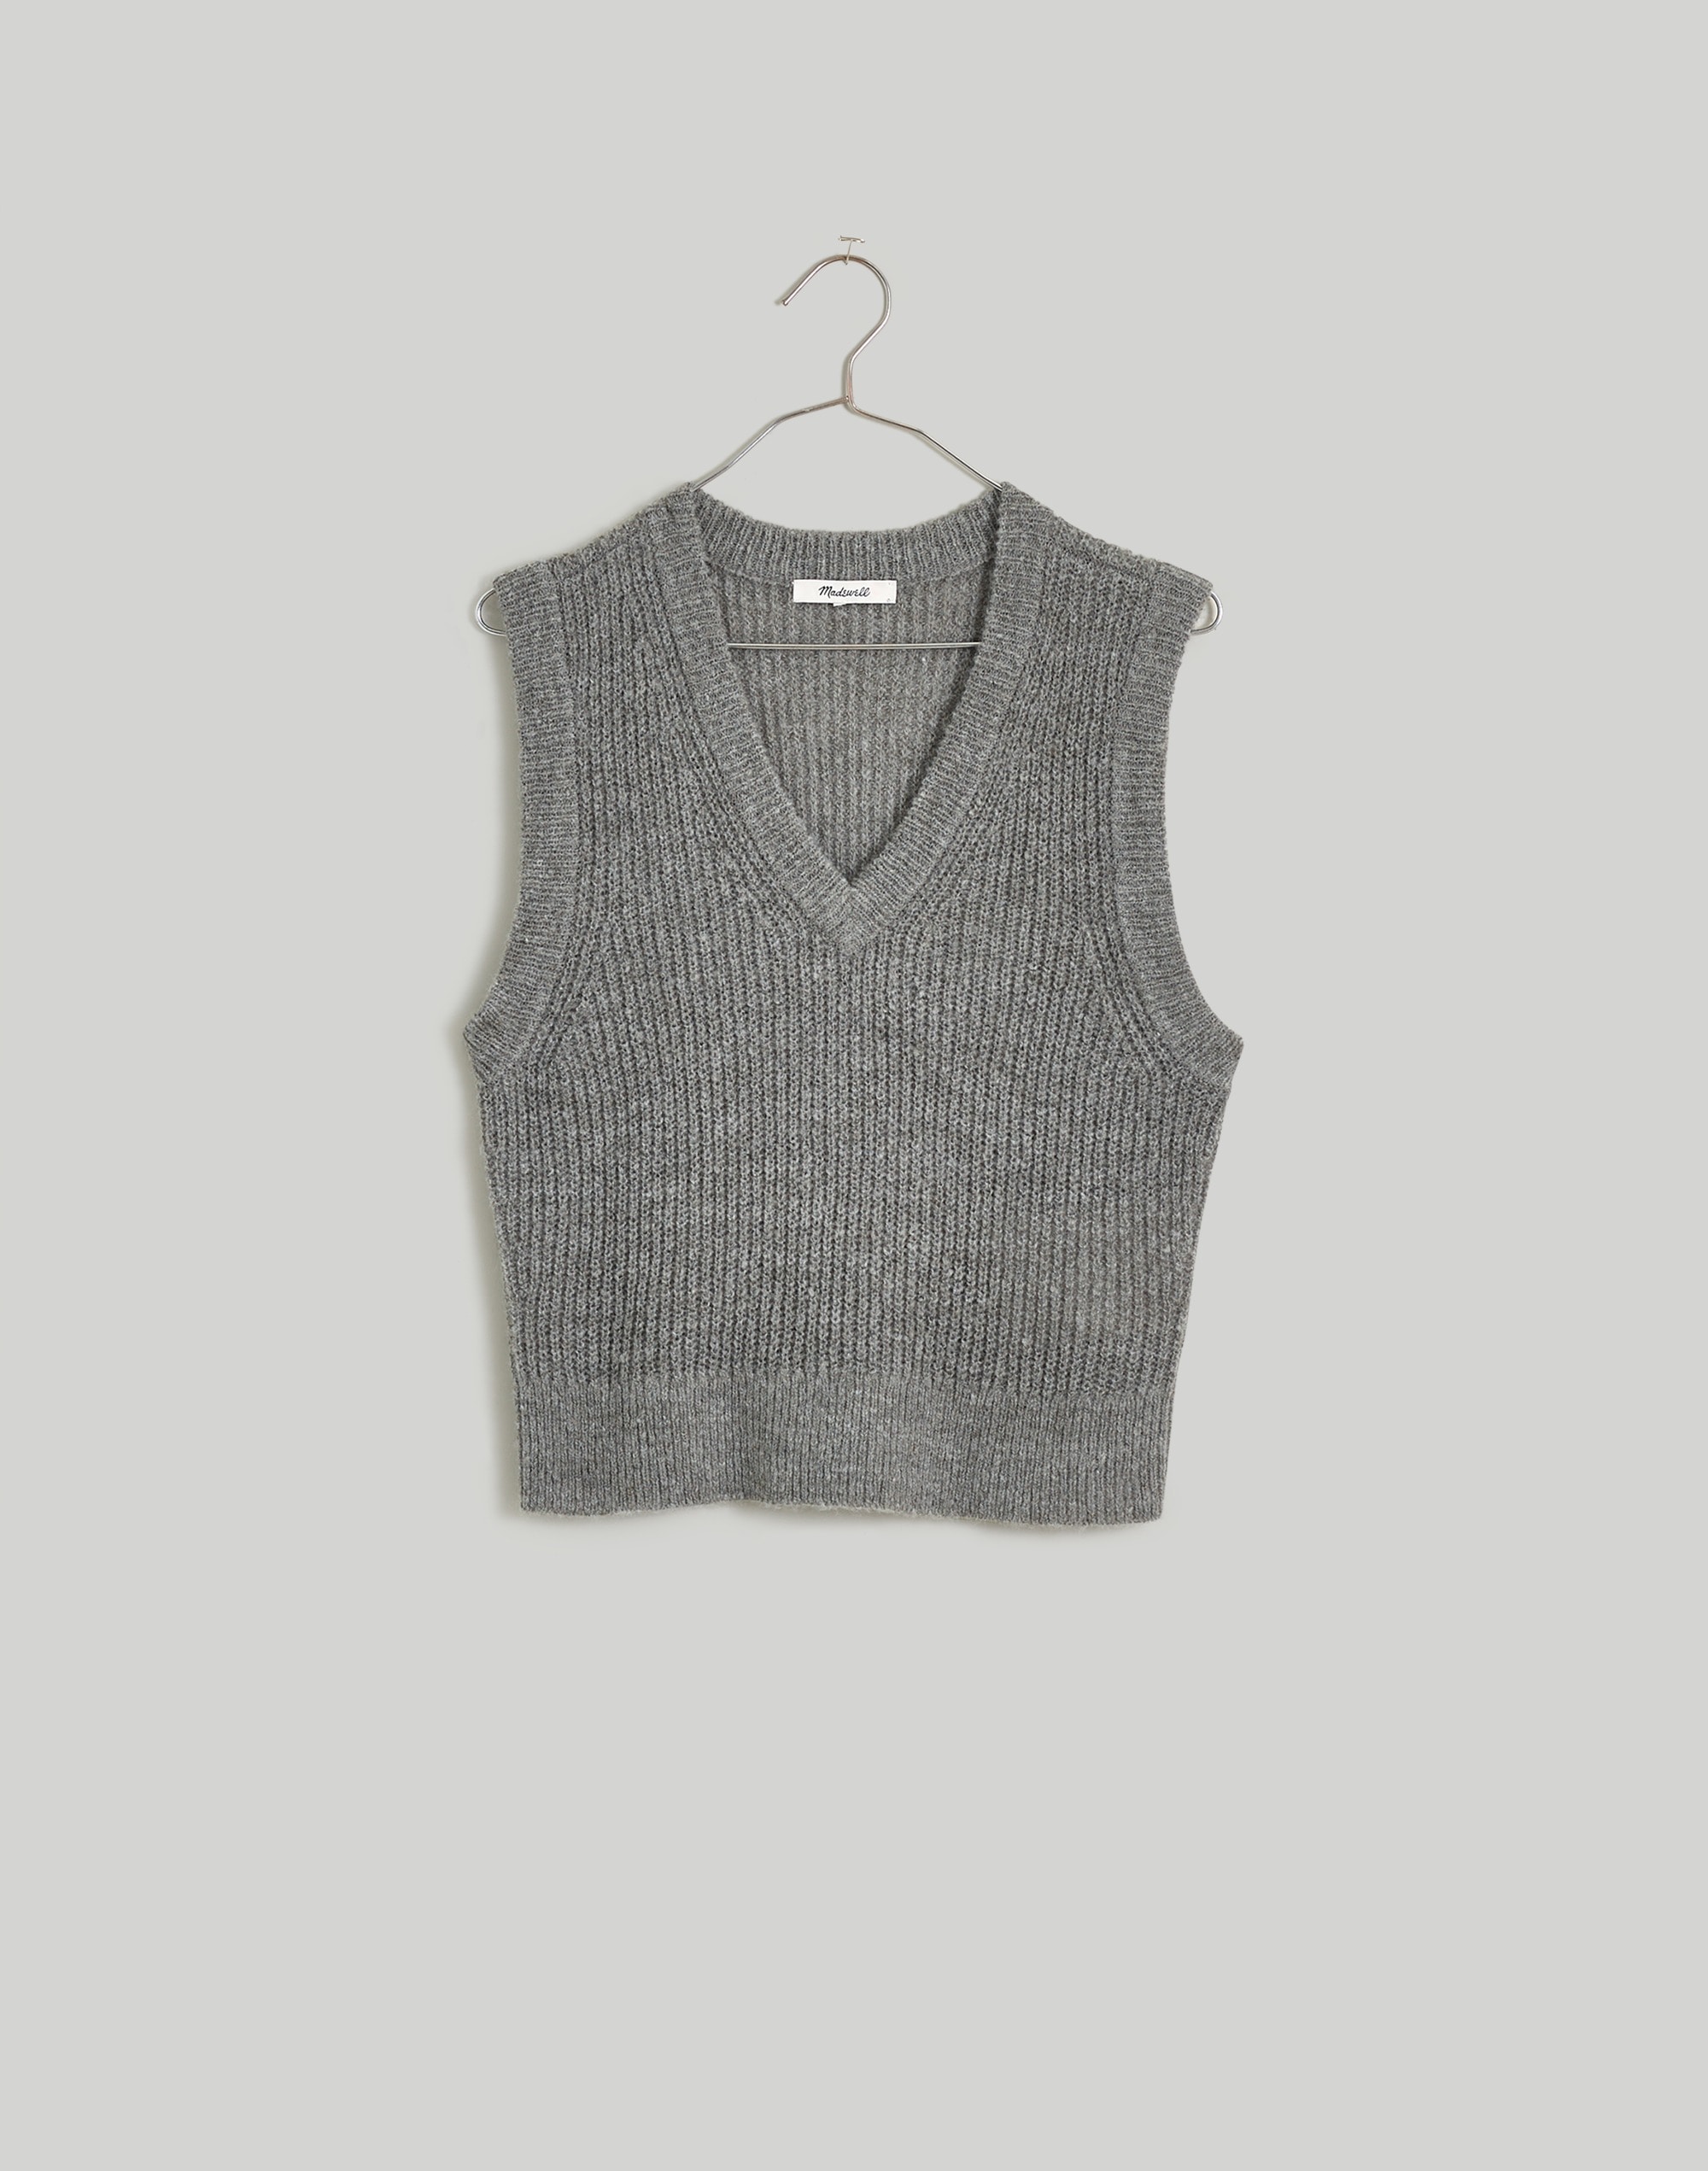 The Fineloft Shrunken Sweater Vest